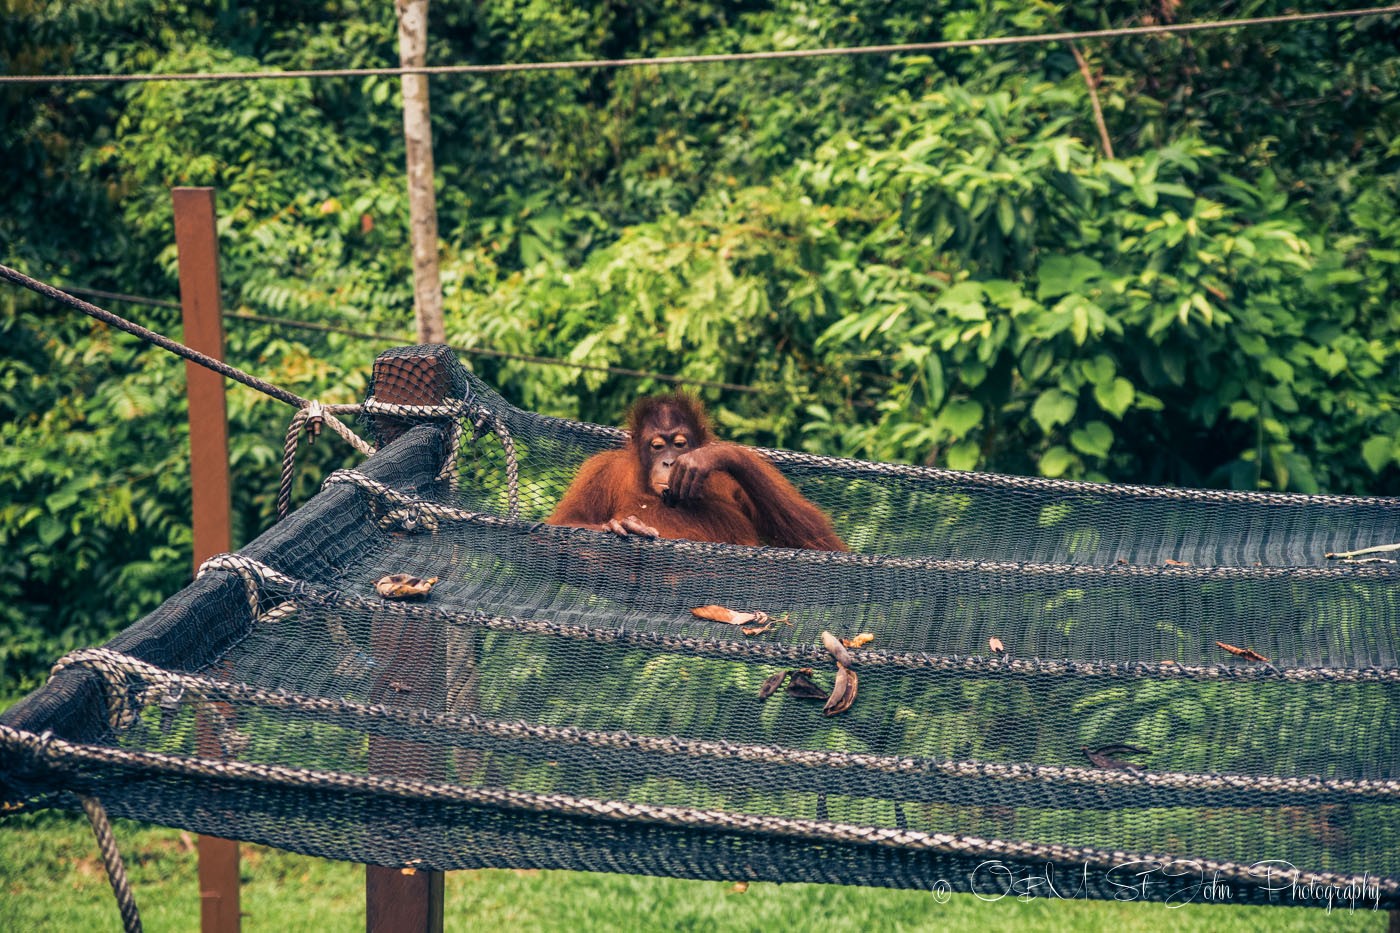 The elusive Borneo Orangutan